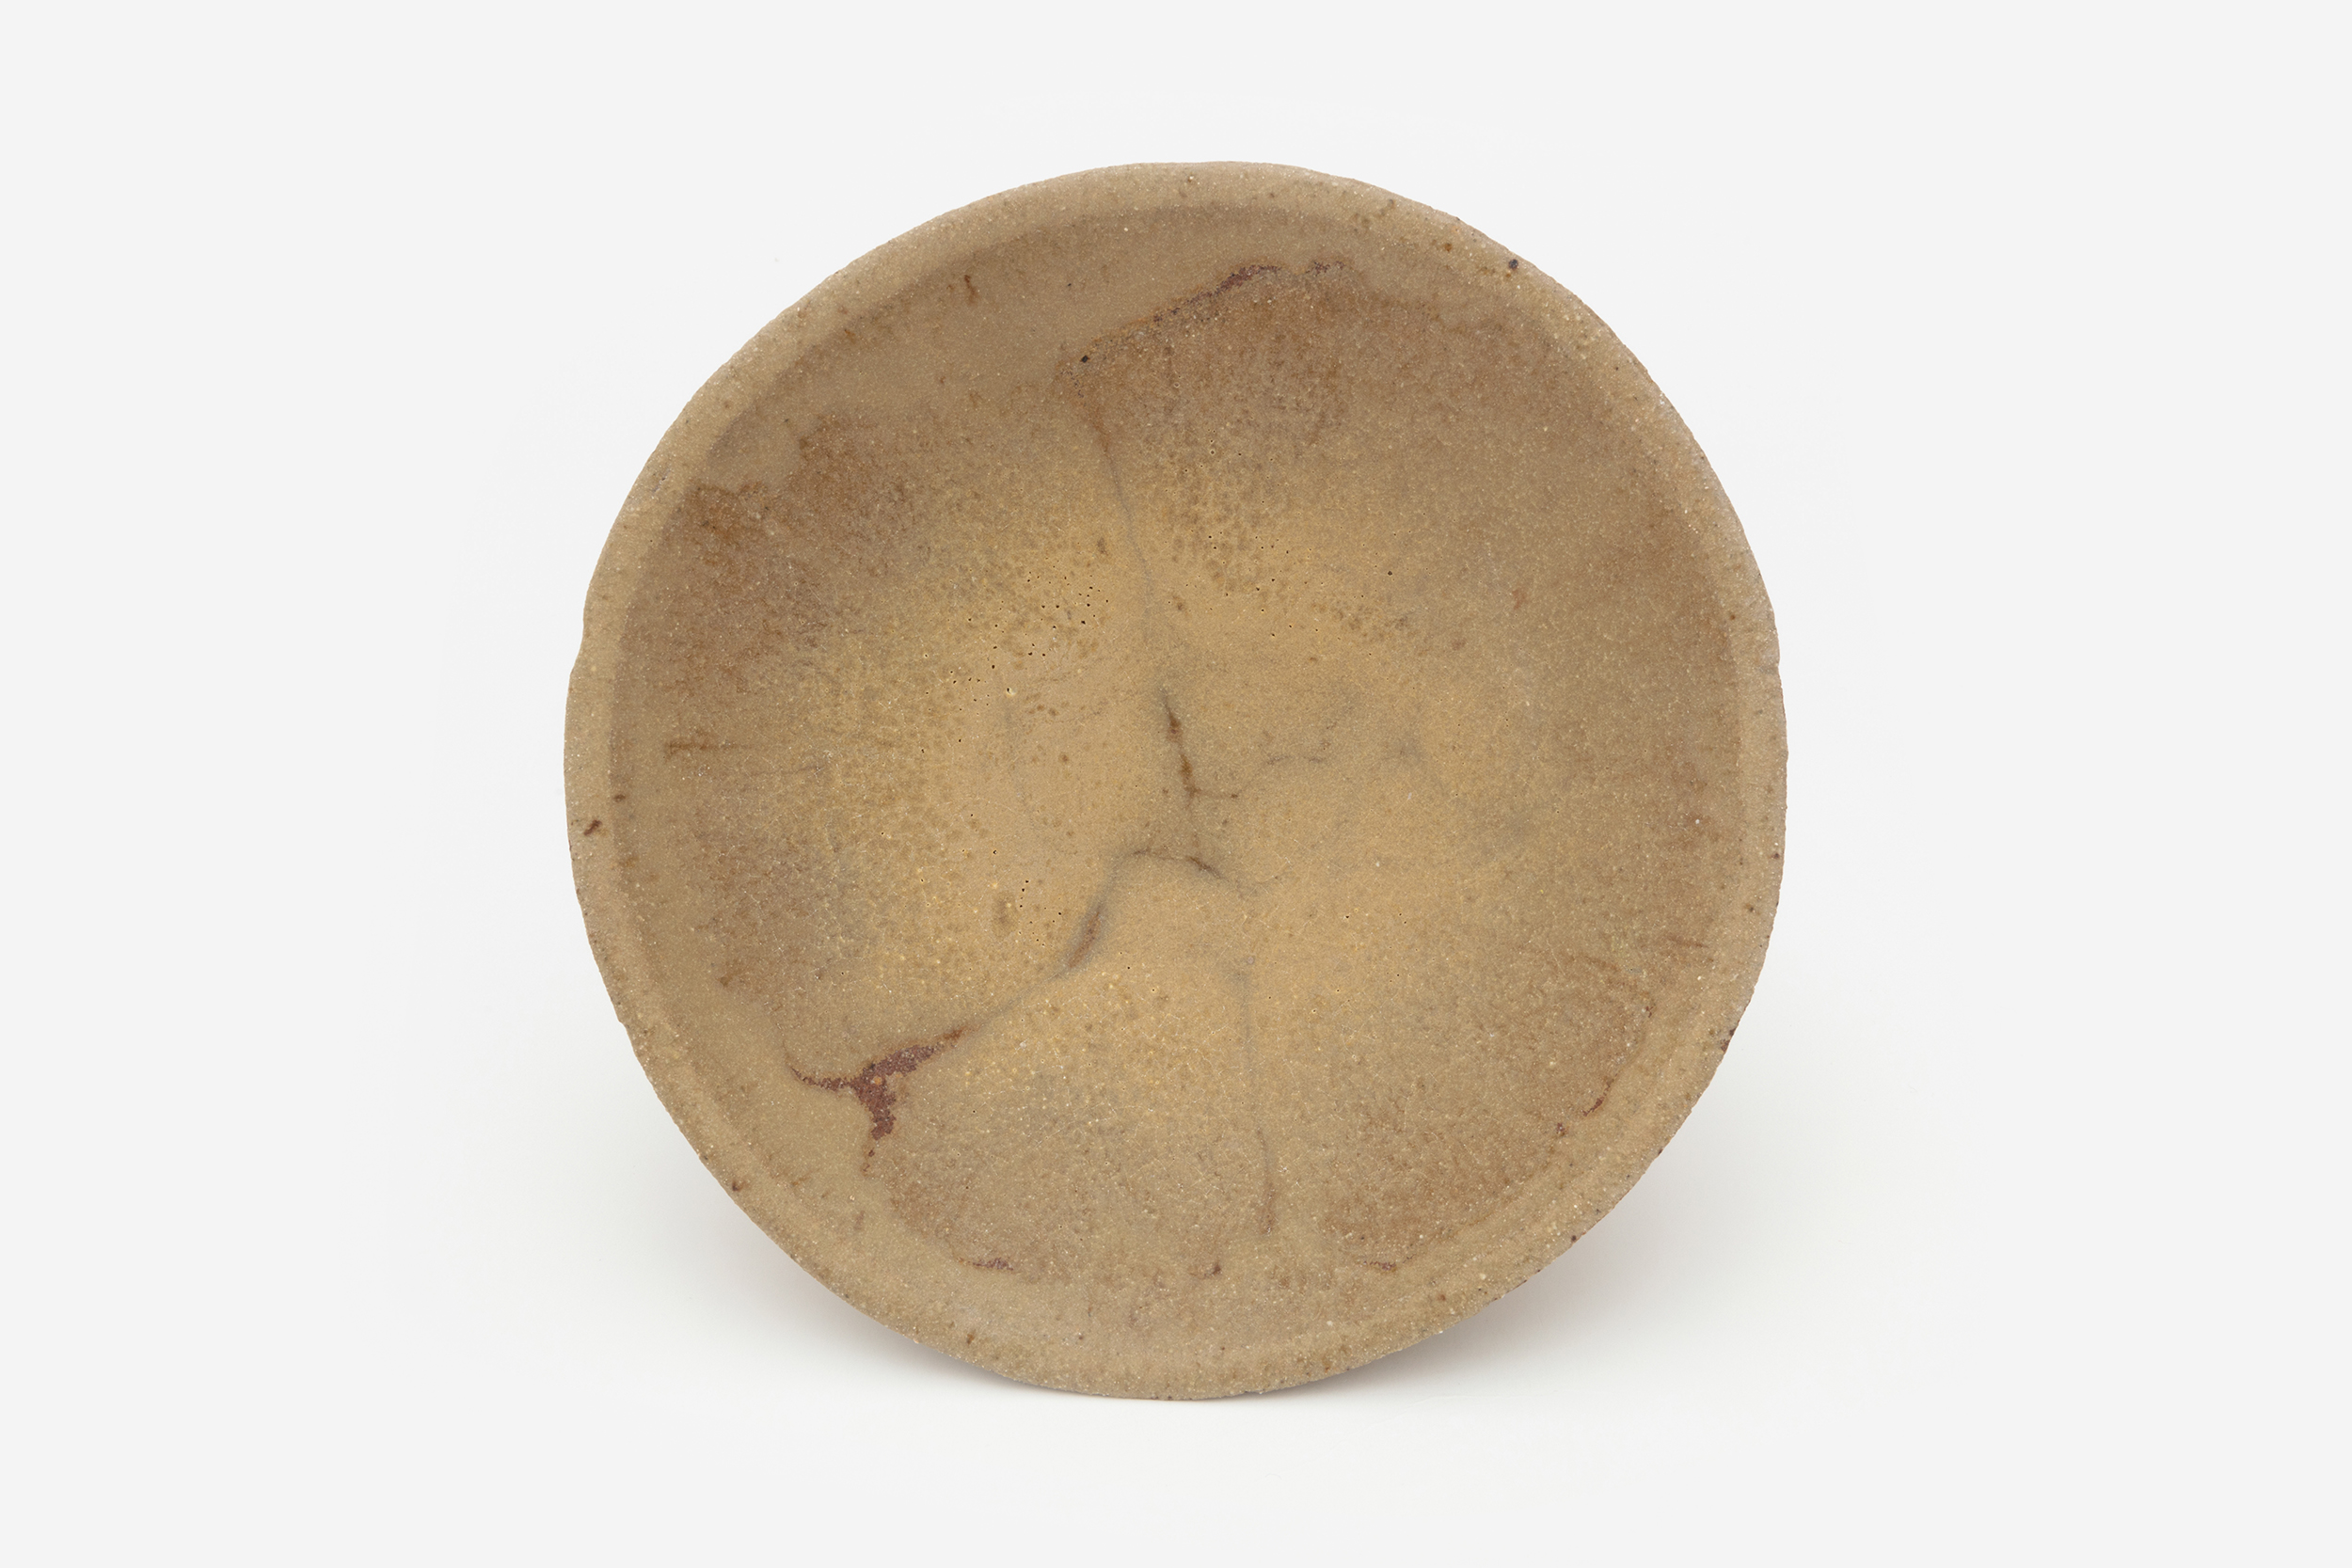 Hylton Nel - Stone bowl, 7 July 2015